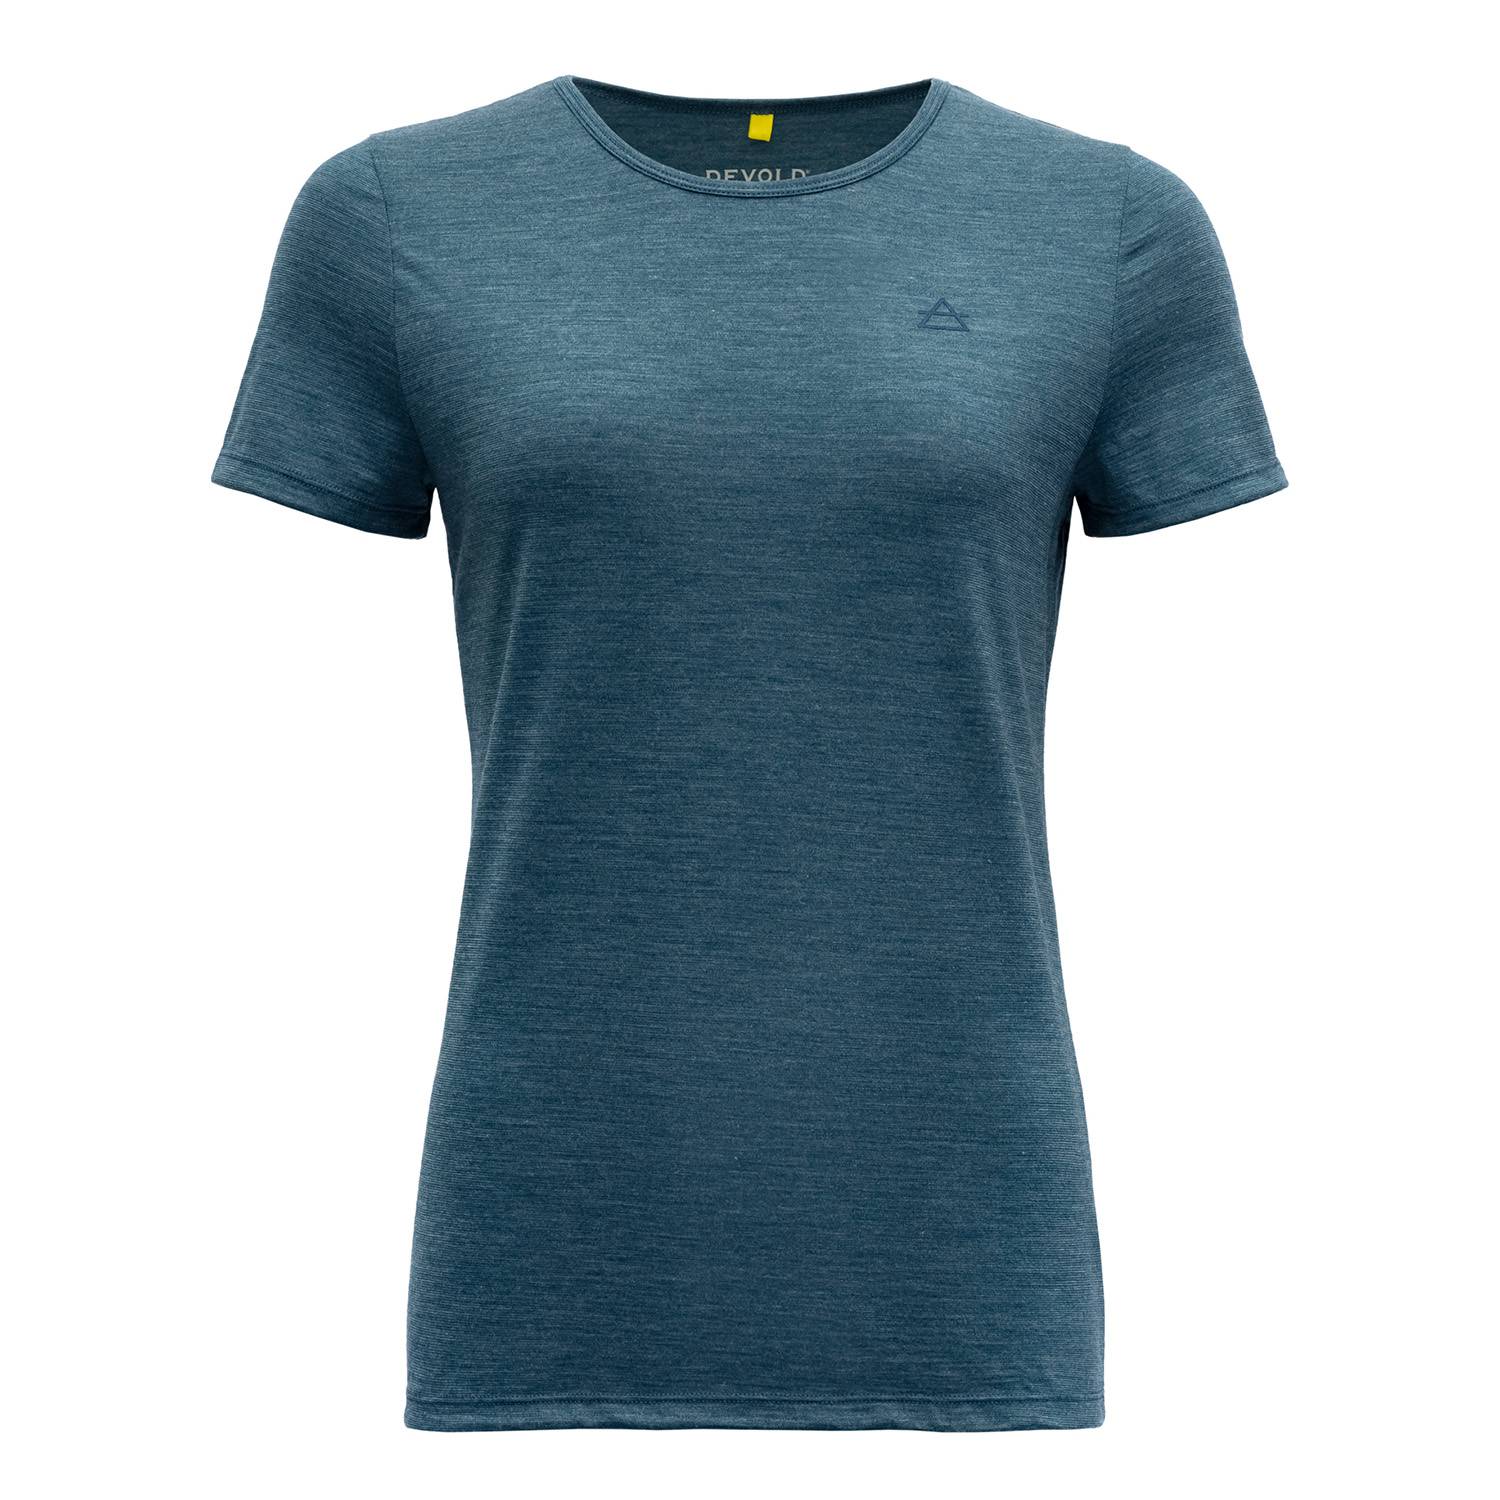 Devold Valldal 130 T-Shirt Woman blau